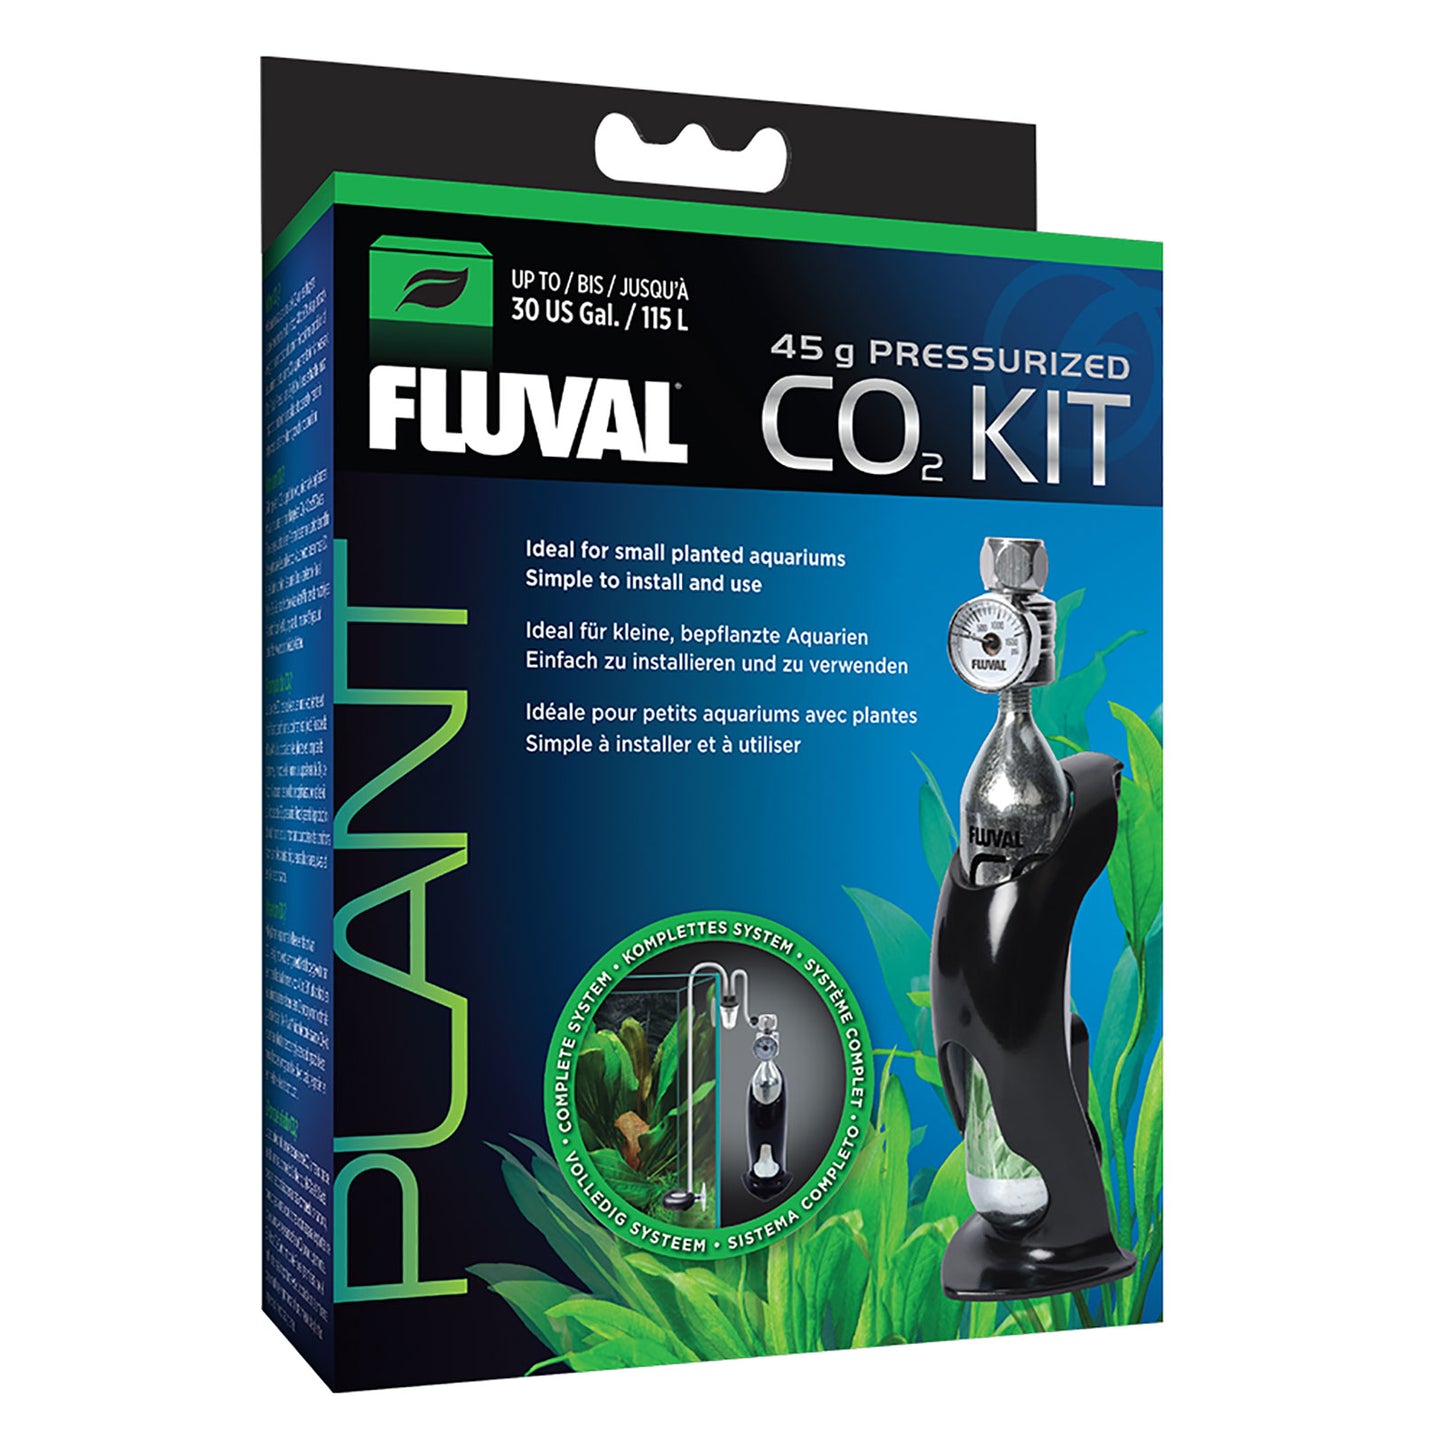 Fluval Pressurized 45 g CO2 Kit - For aquariums up to 115 L (30 US gal)